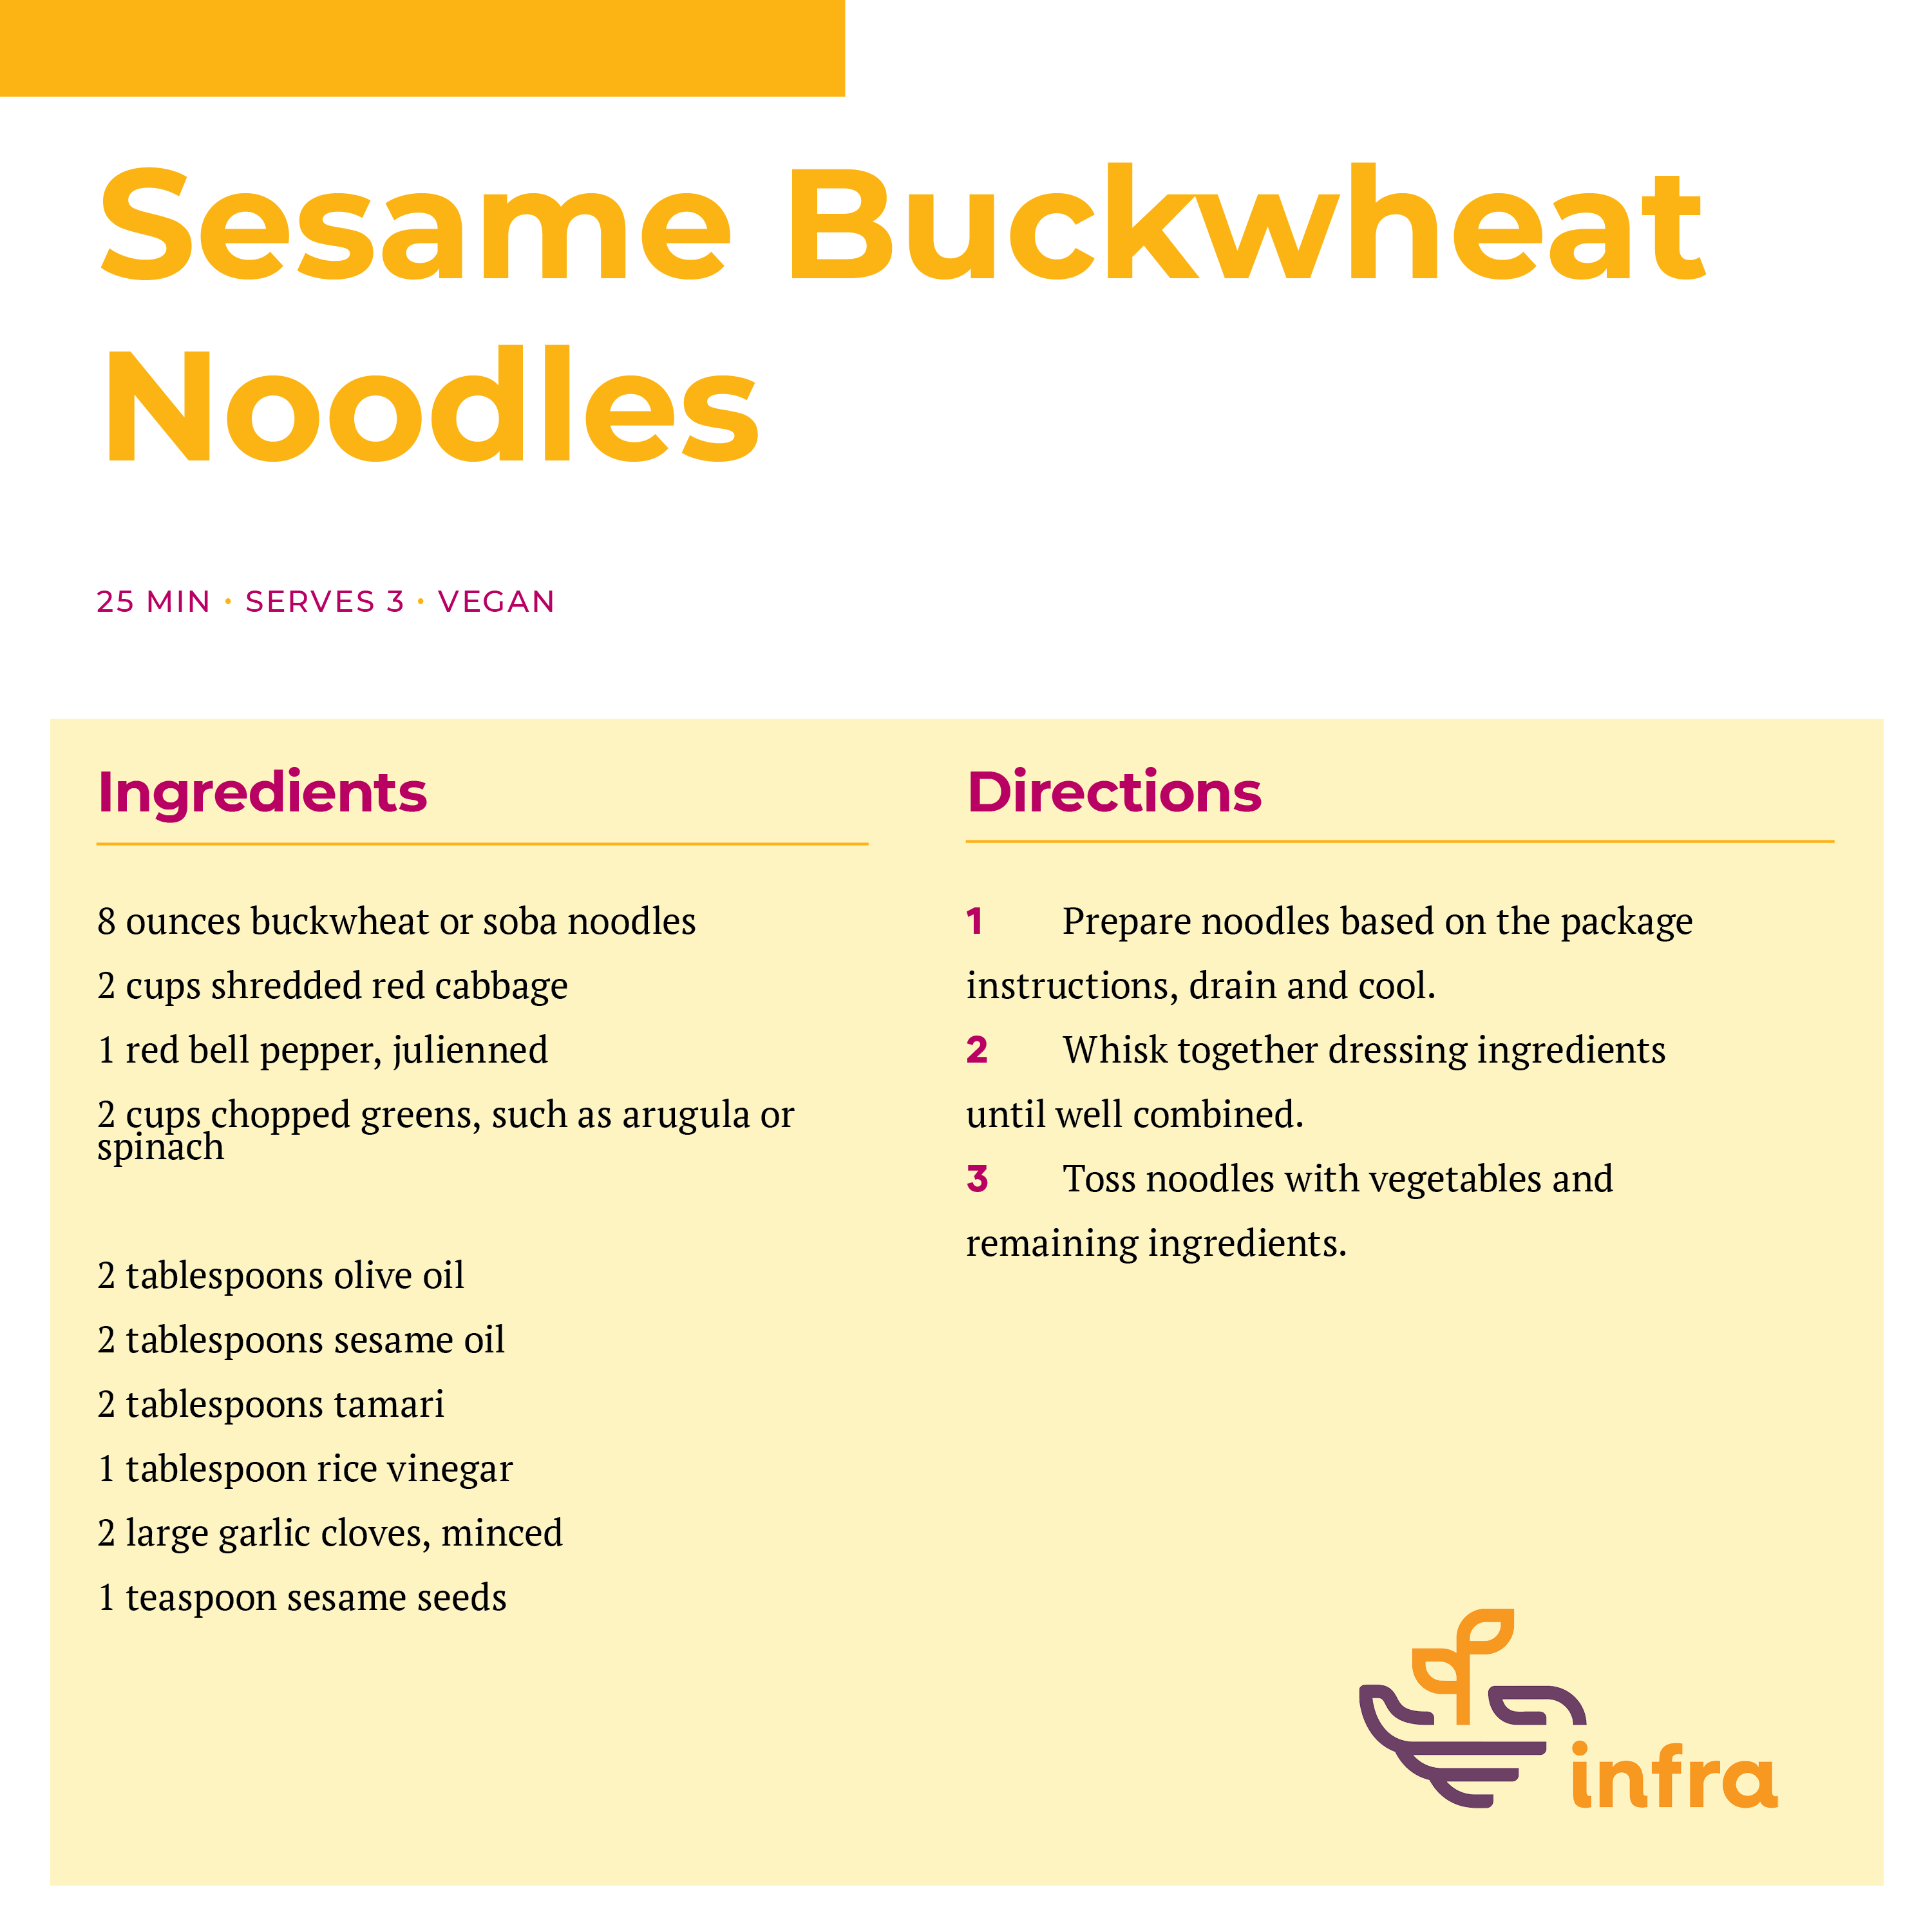 Sesame Buckwheat Noodles